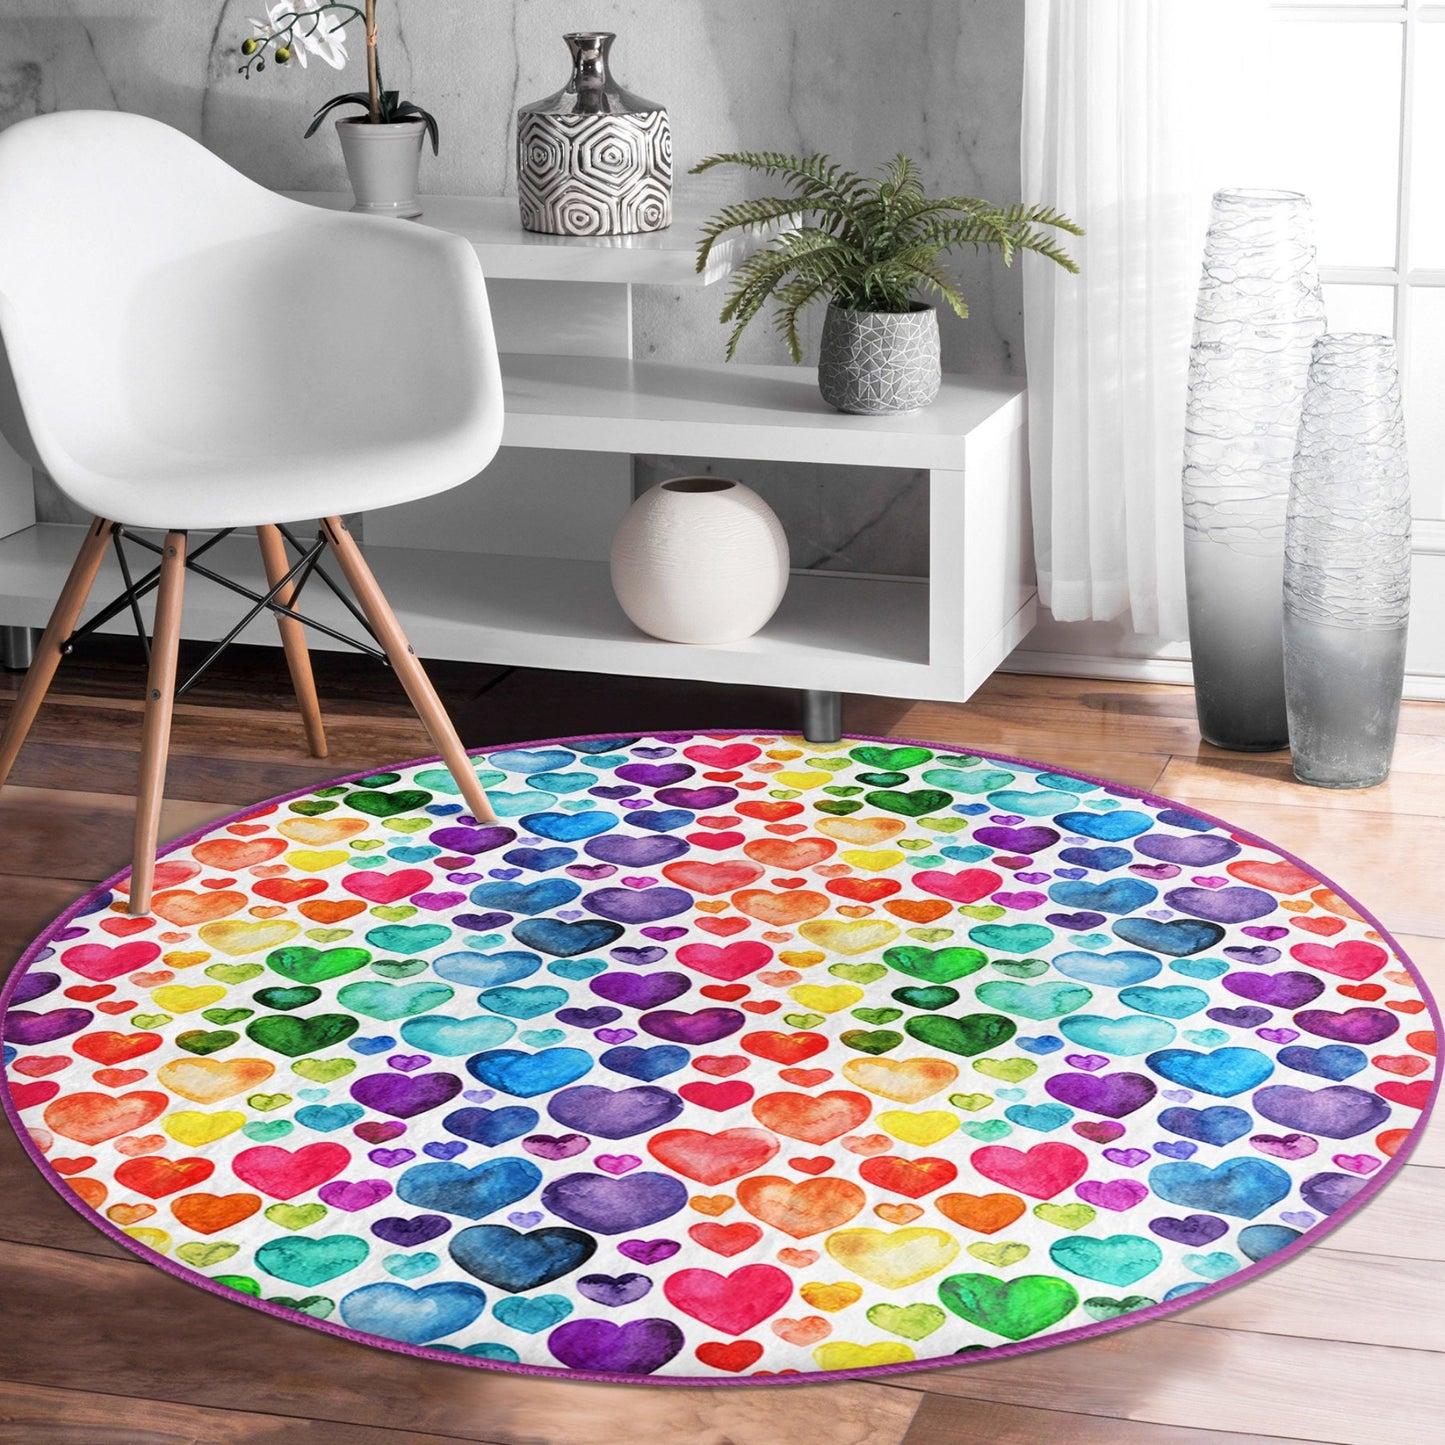 Vibrant Heart Pattern Rainbow Rug - Playful Design